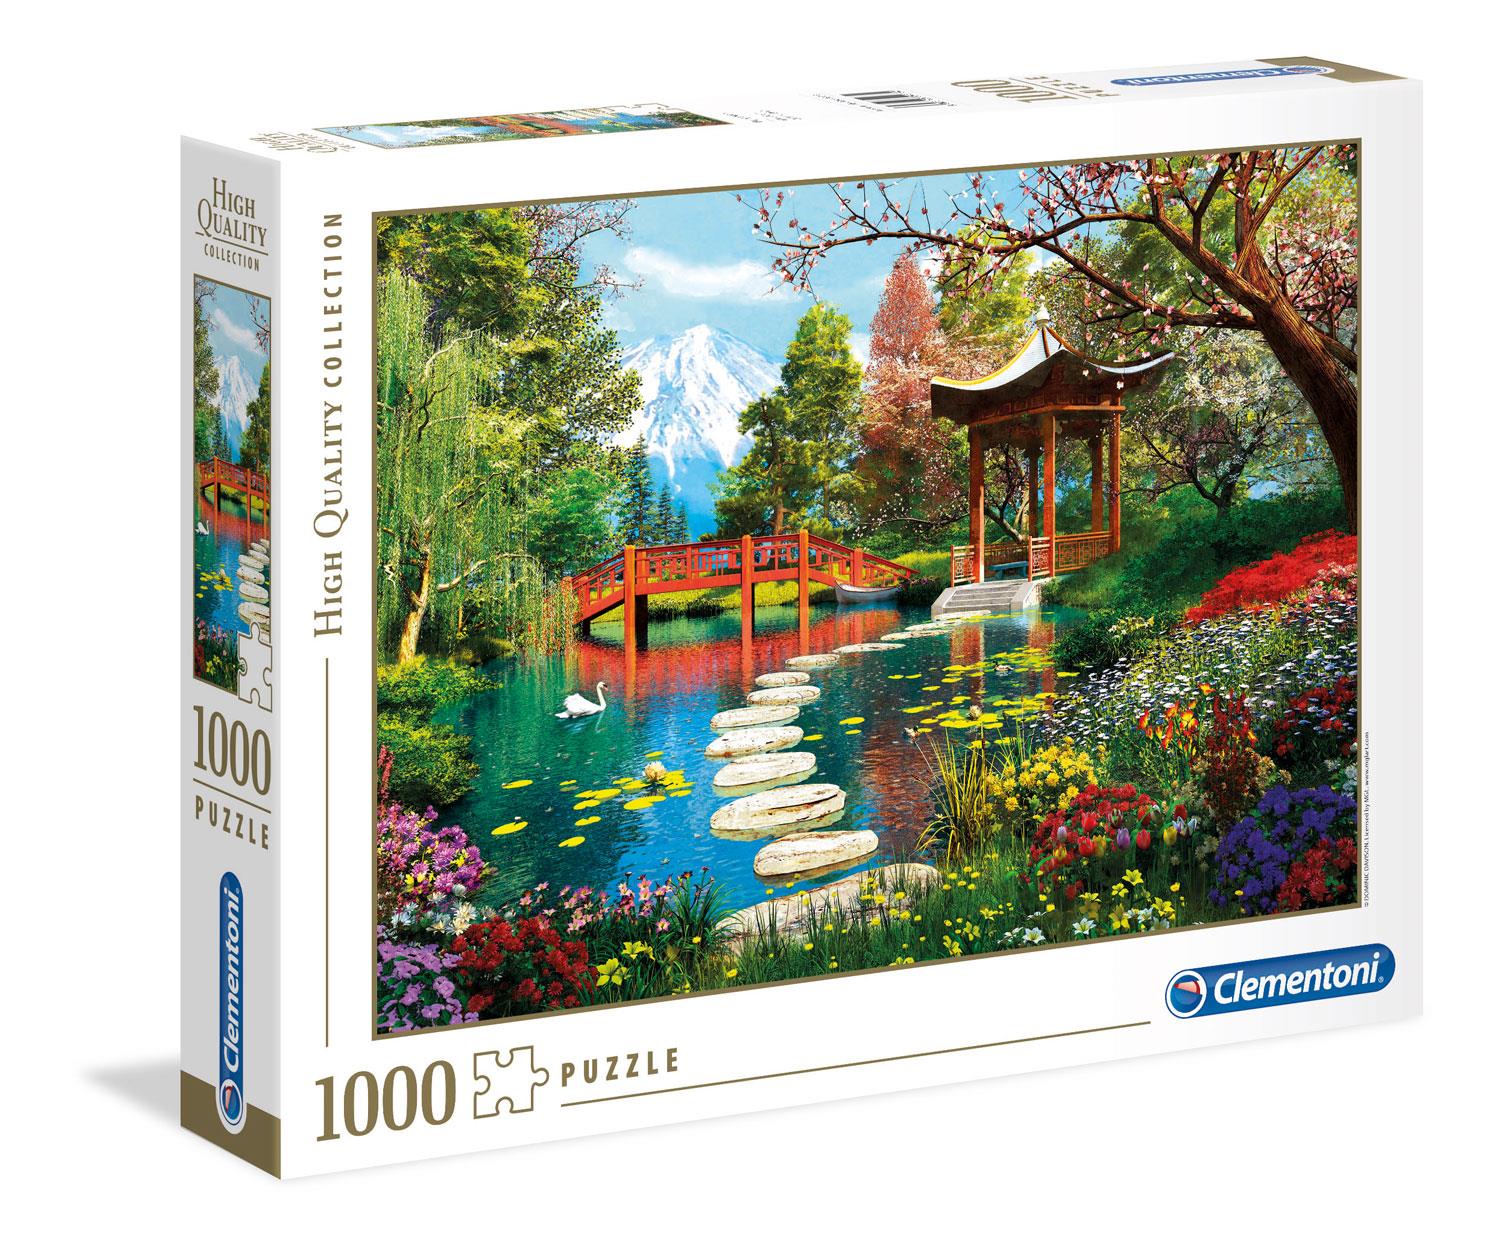 Clementoni Fuji Garden High Quality  Jigsaw Puzzle (1000 Pieces)